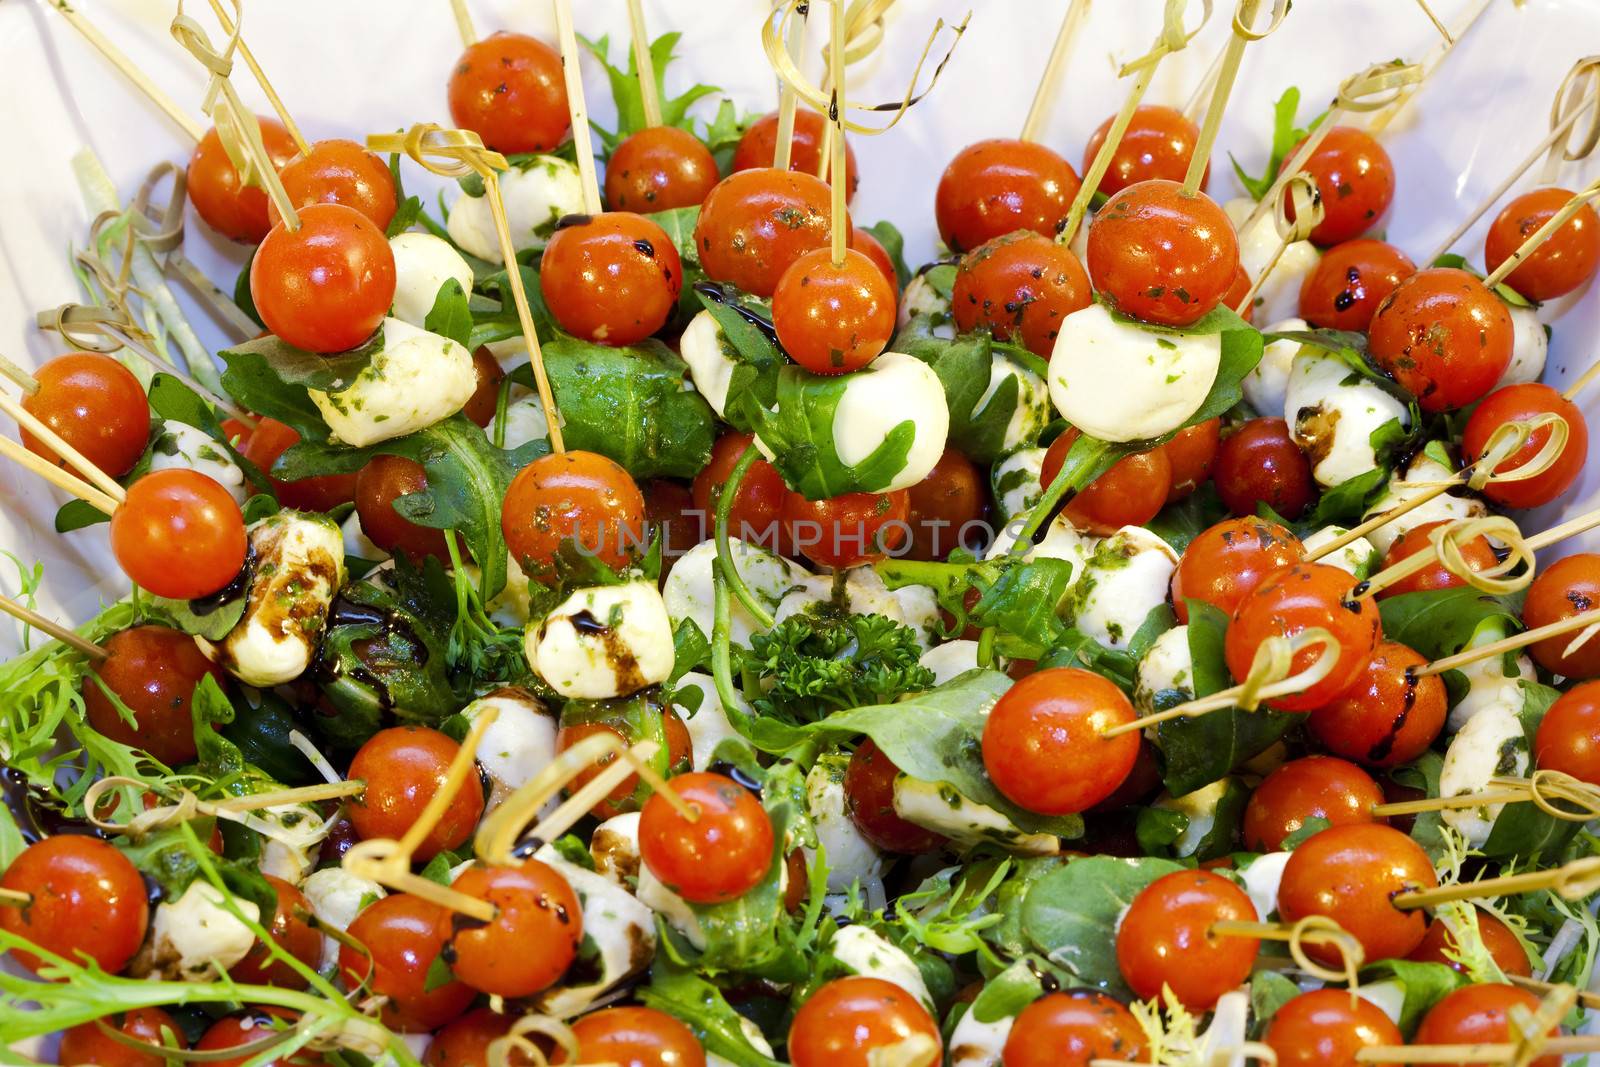 appetizer - tomato salad with mozzarella